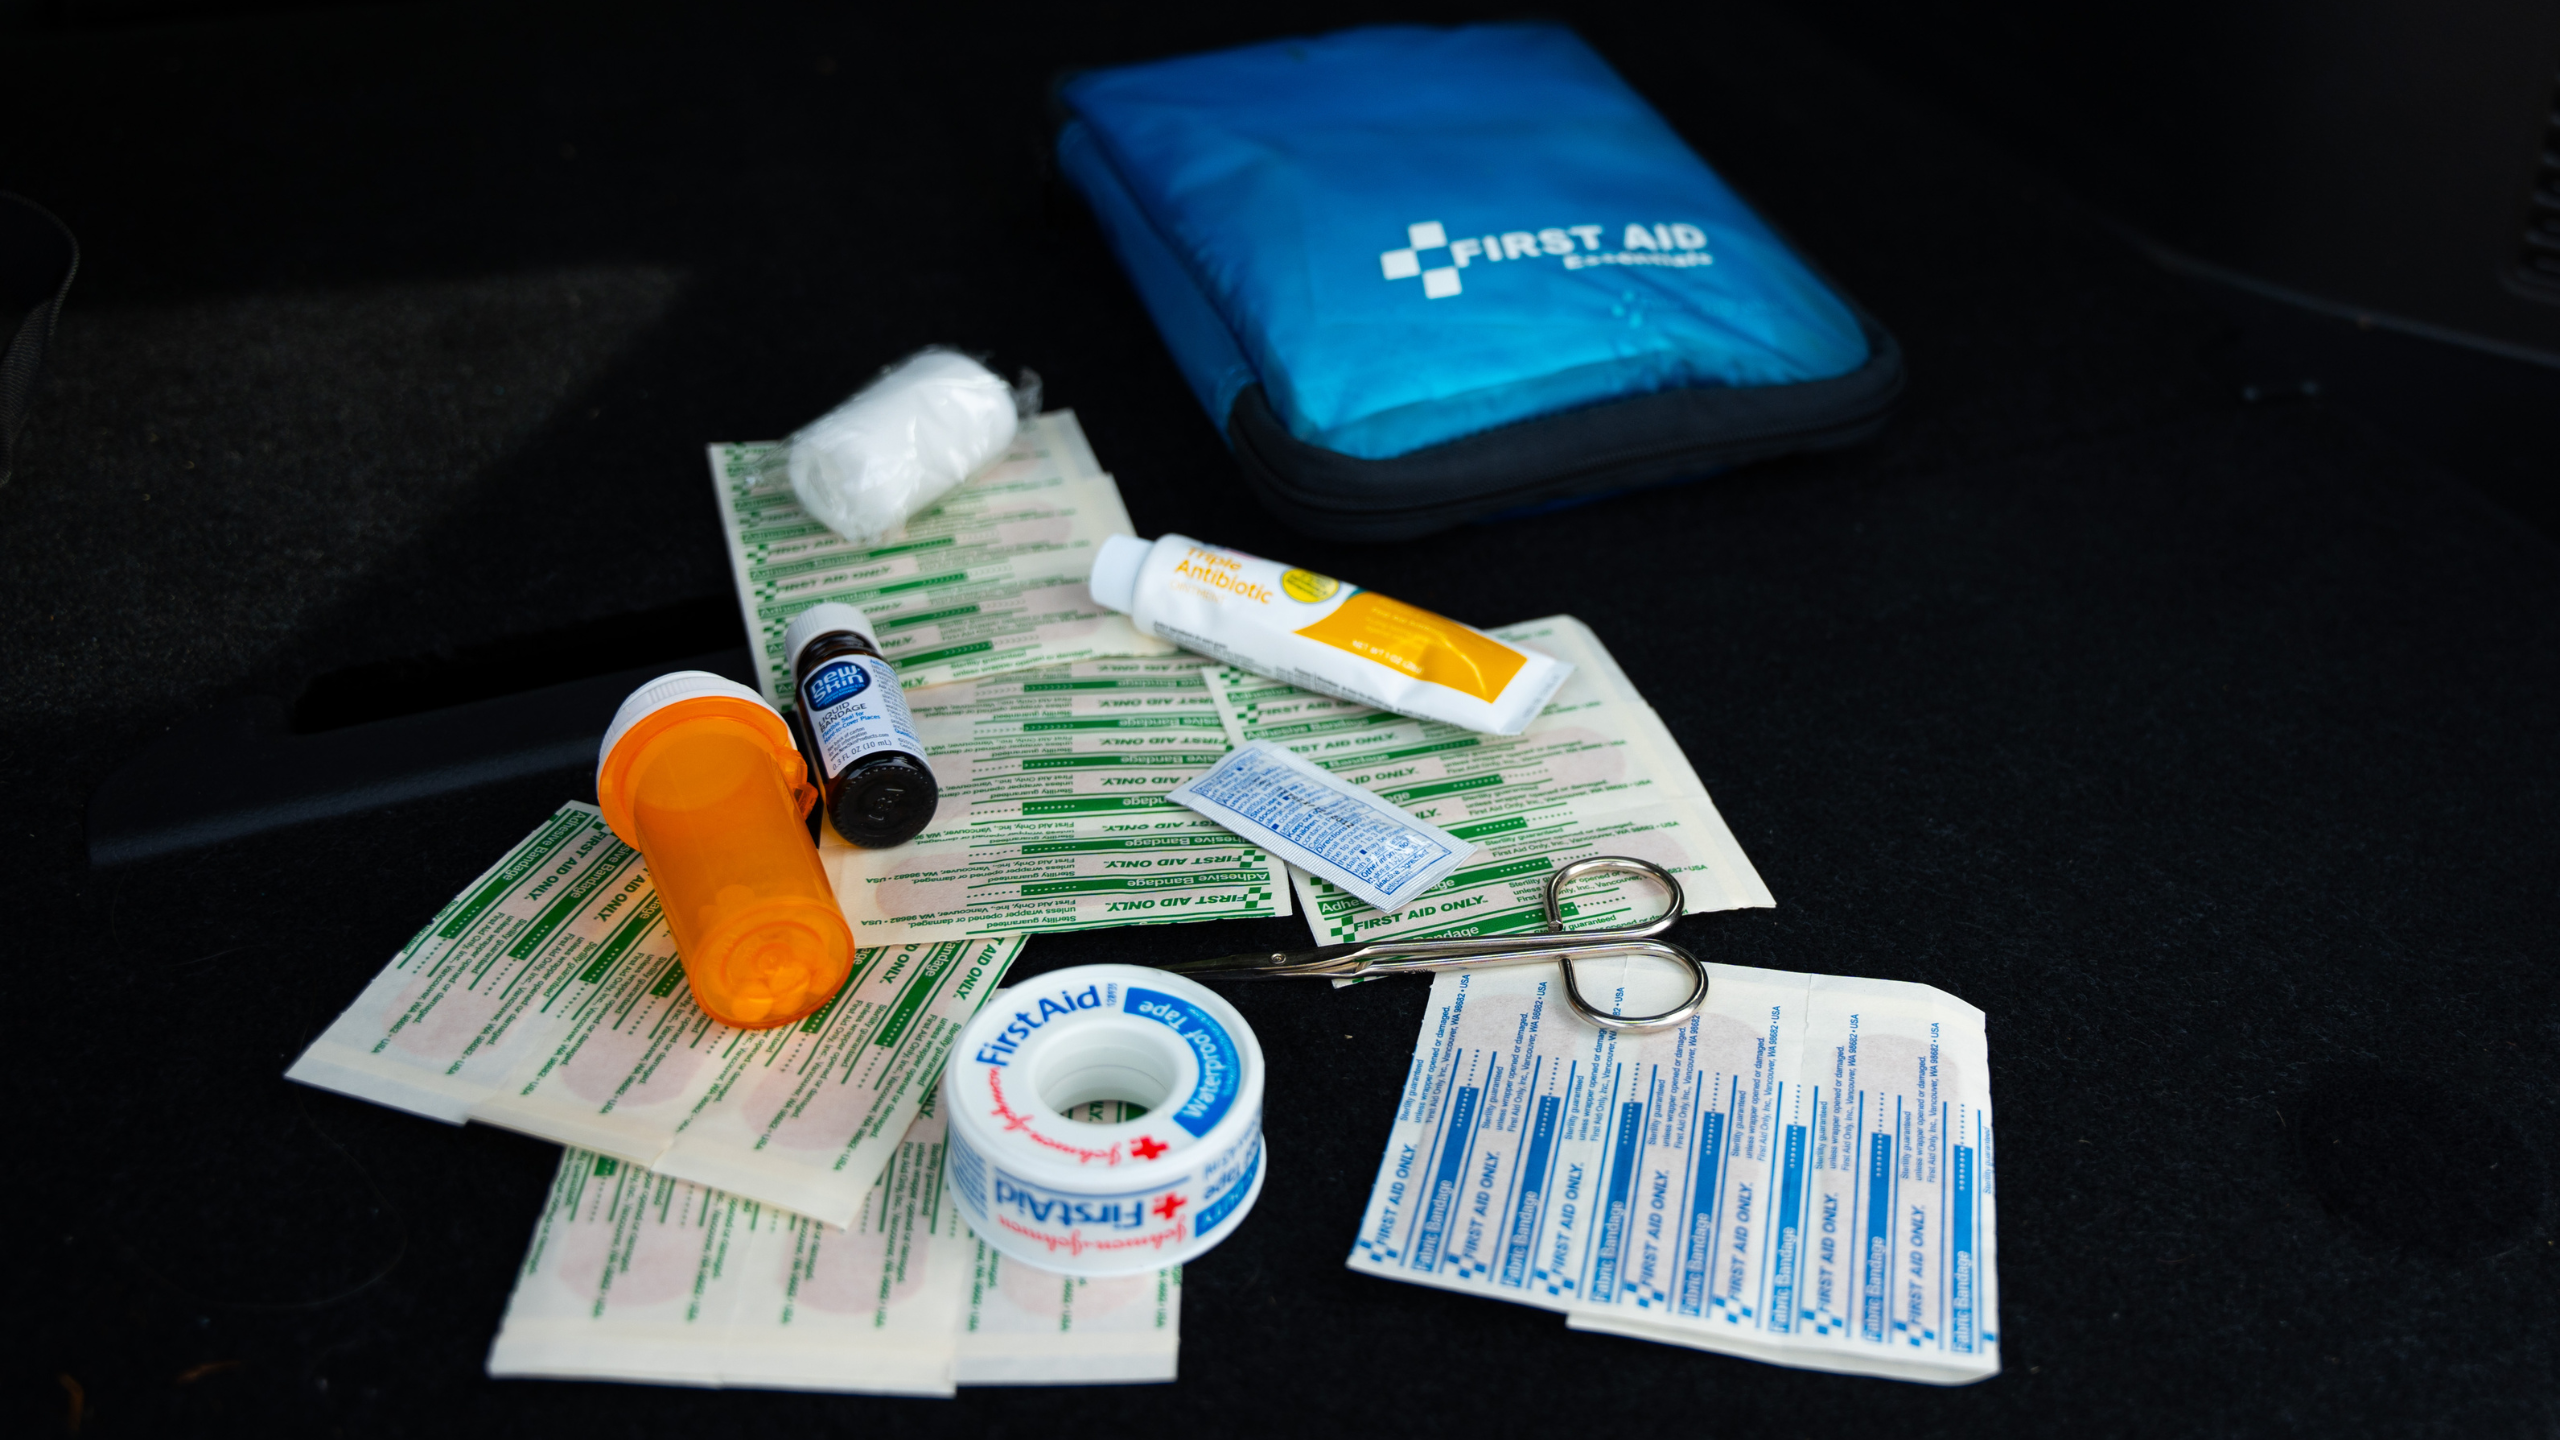 first aid kit items. medicine, band-aids, scissors, gauze.